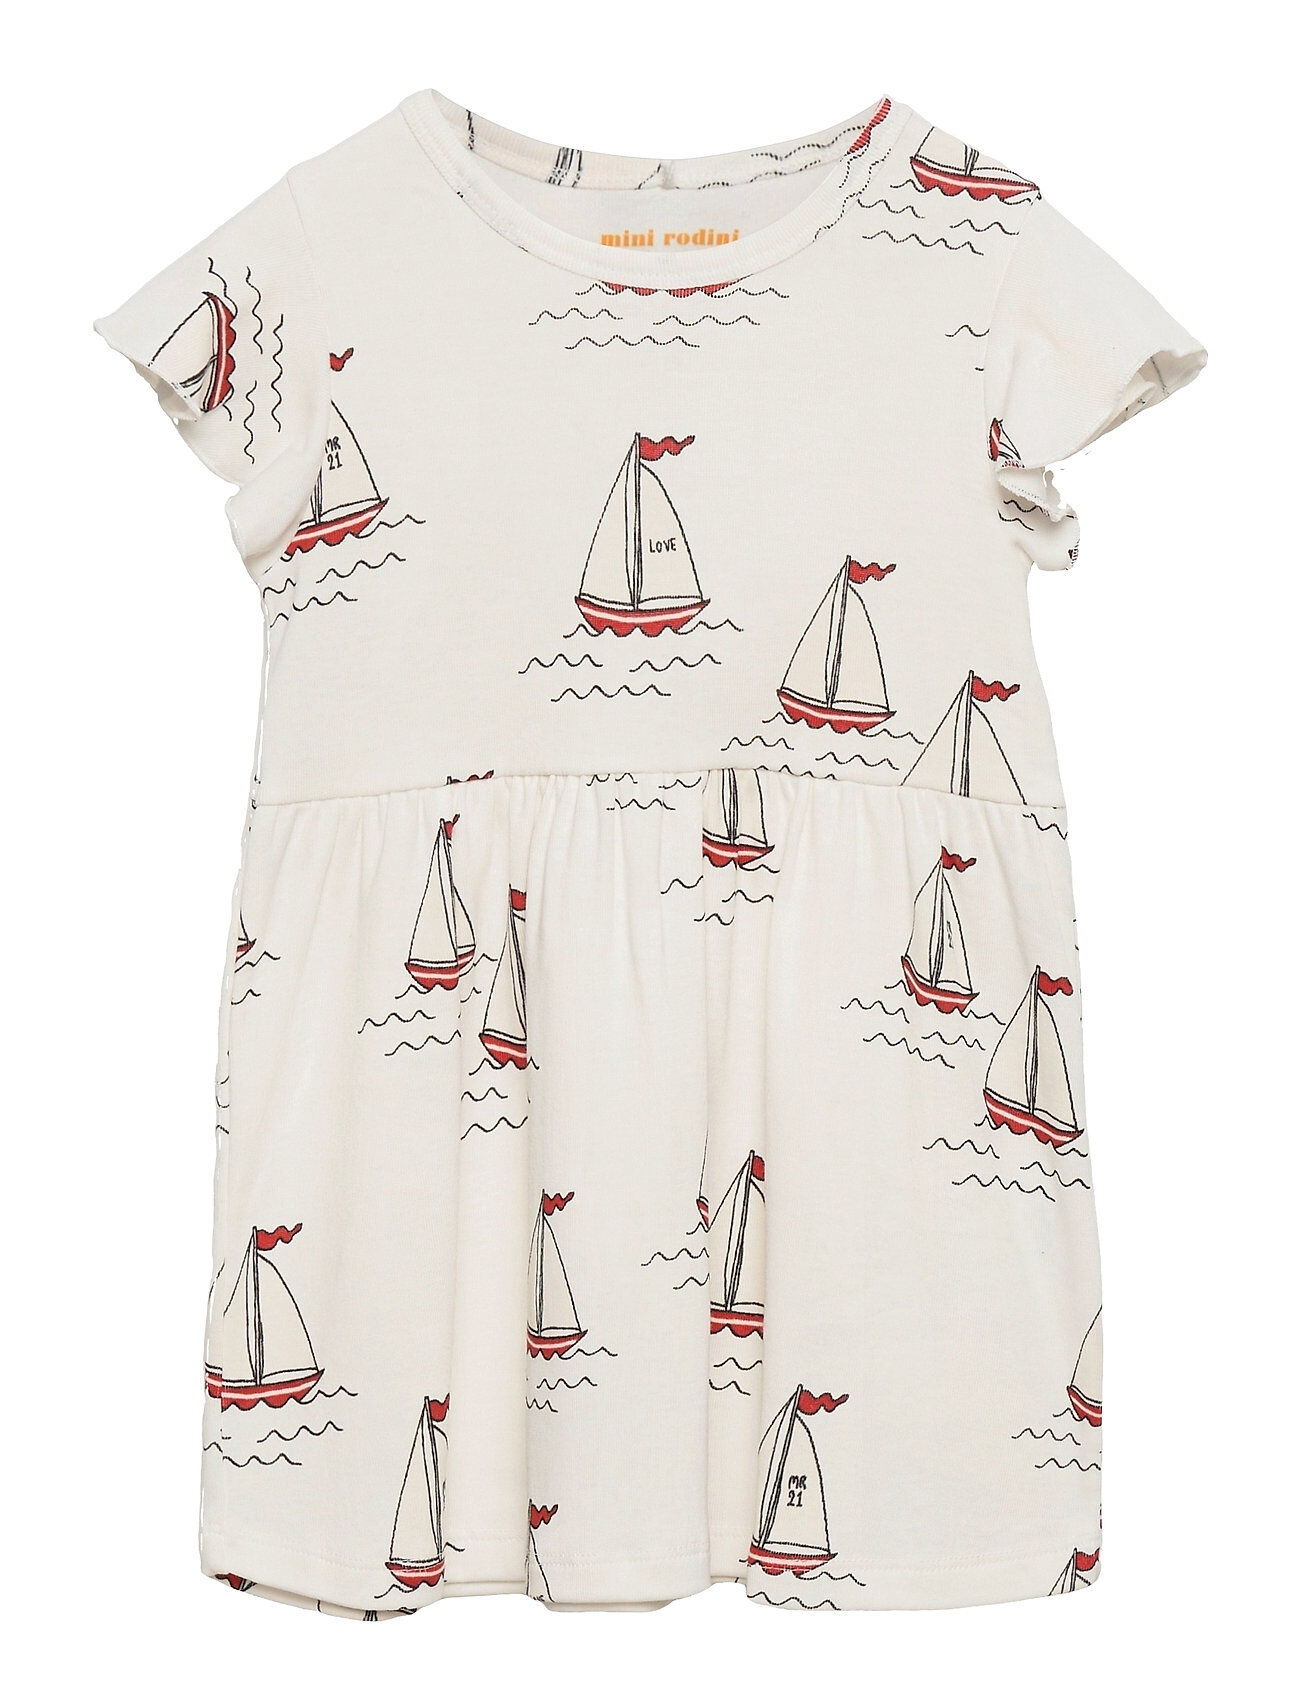 Mini Rodini Sailing Boats Aop Wingdress Dresses & Skirts Dresses Casual Dresses Short-sleeved Casual Dresses Grå Mini Rodini